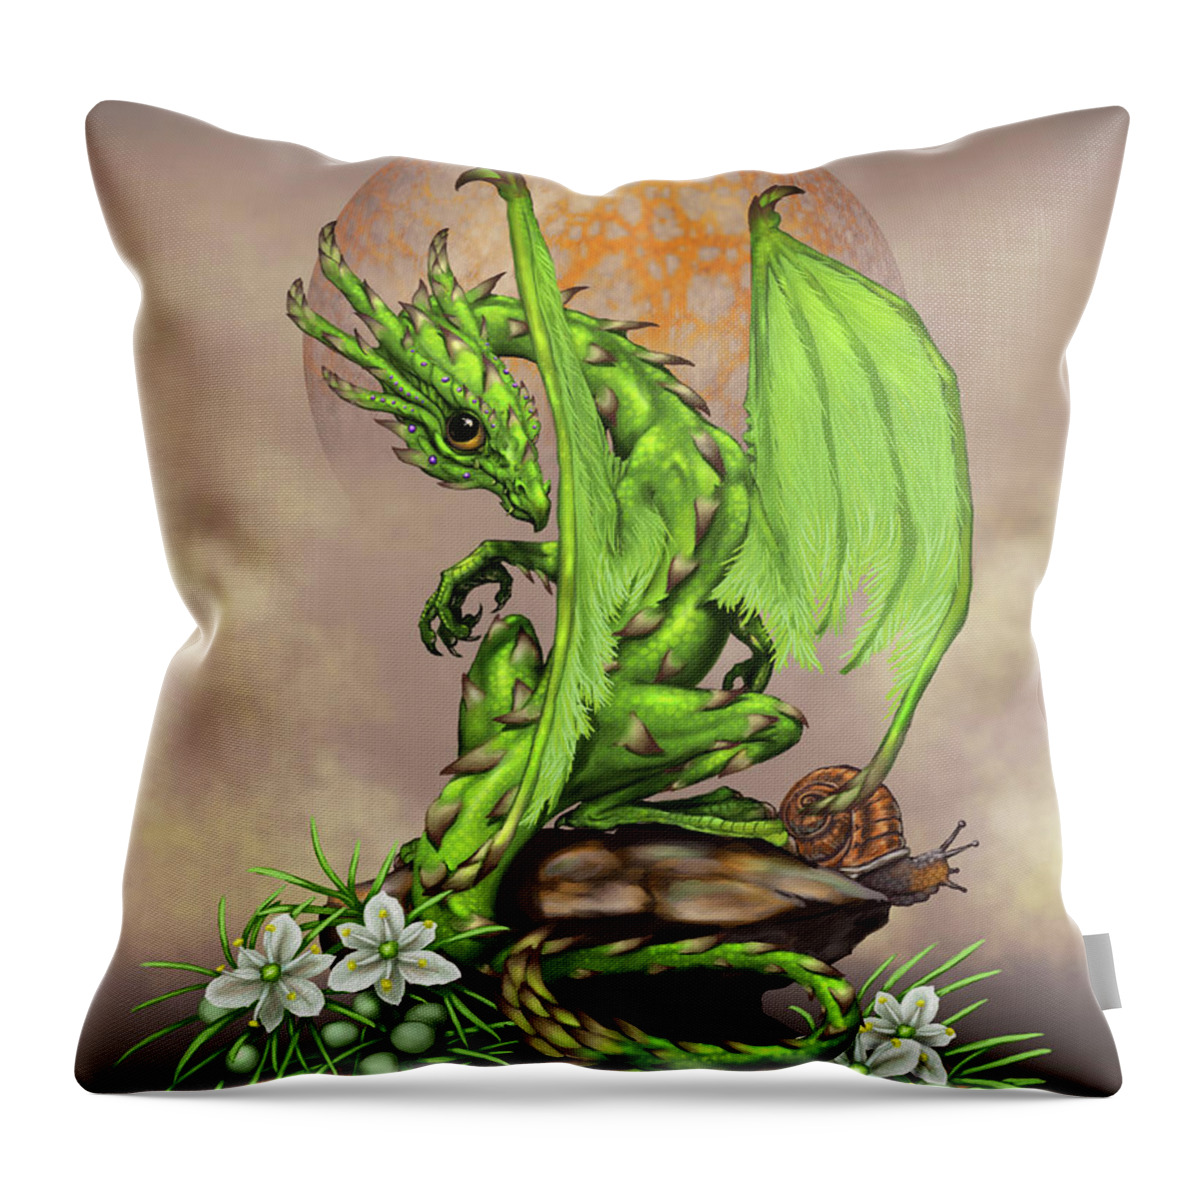 Asparagus Throw Pillow featuring the digital art Asparagus Dragon by Stanley Morrison